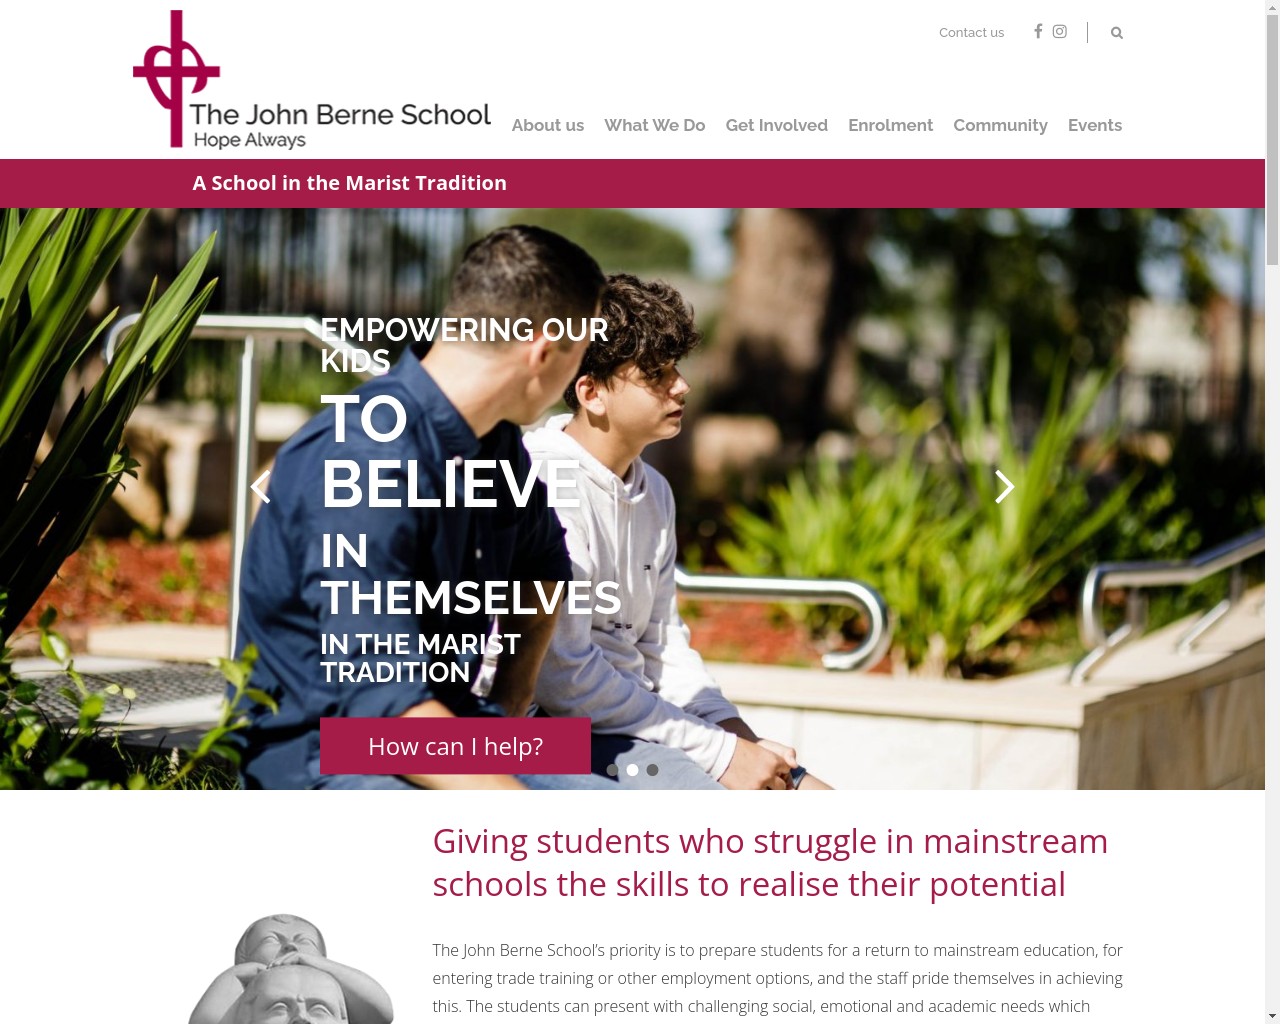 The John Berne School